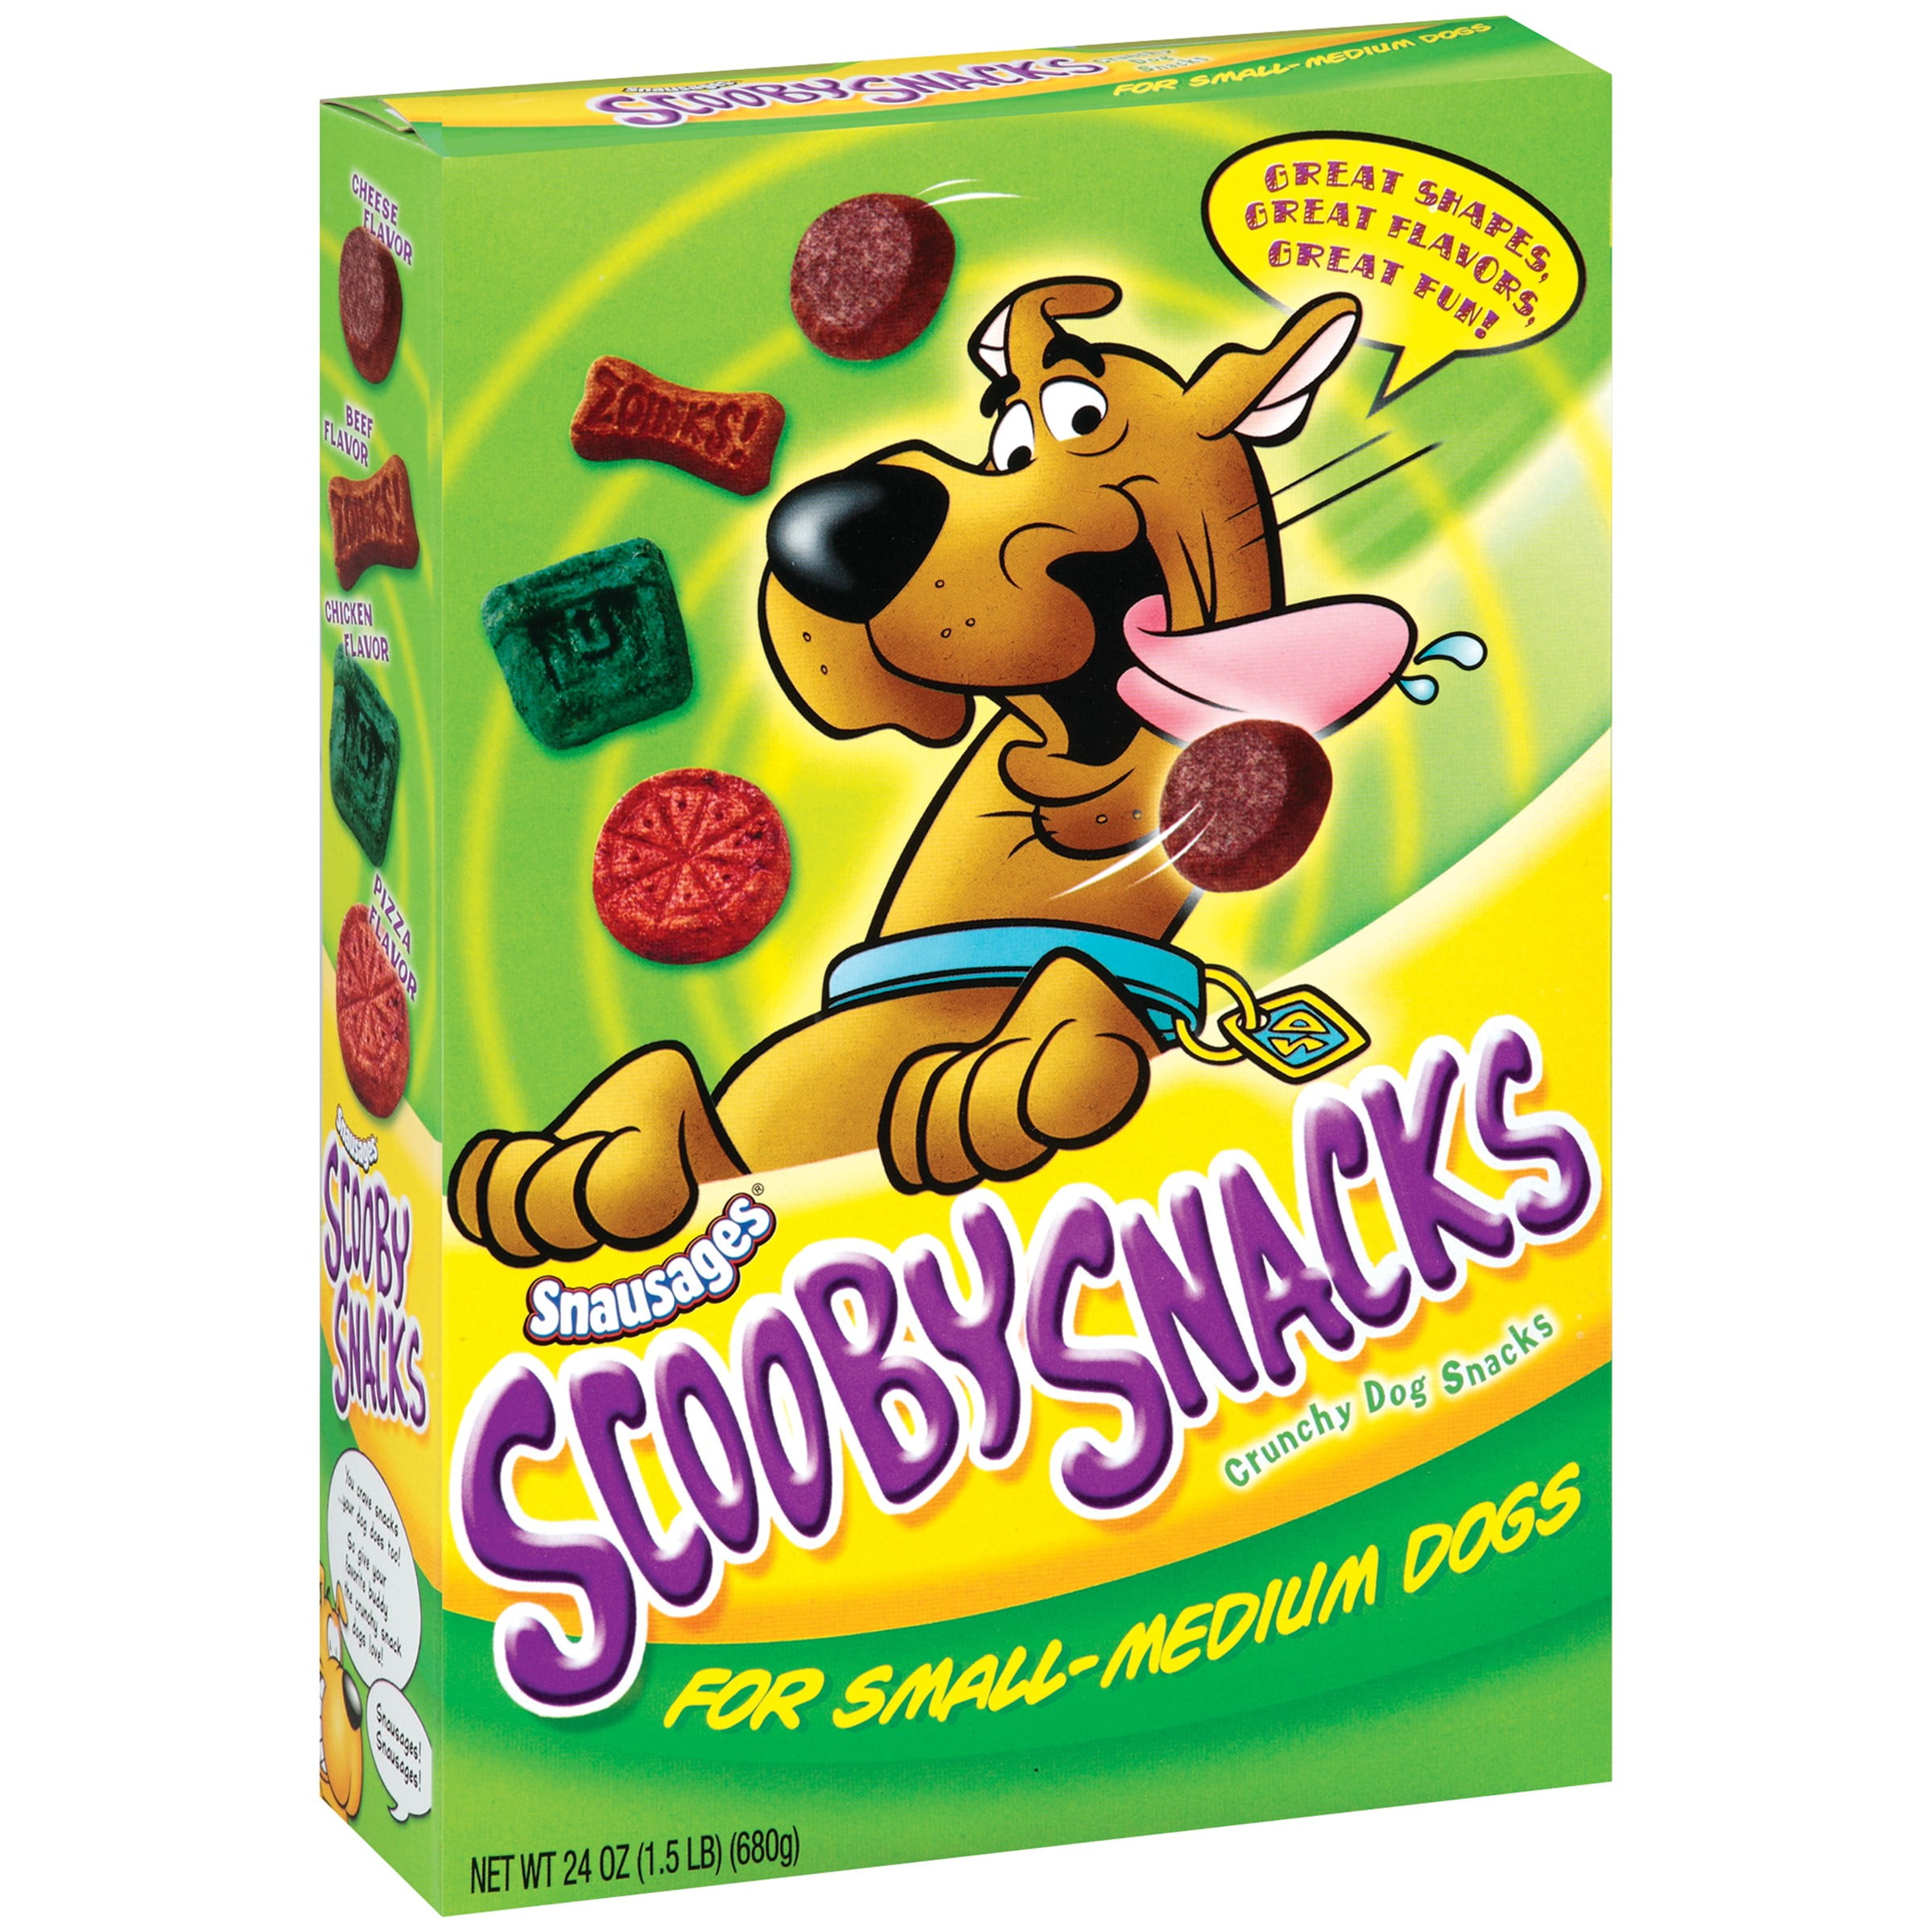 Snausages Scooby Snacks Small/Medium 